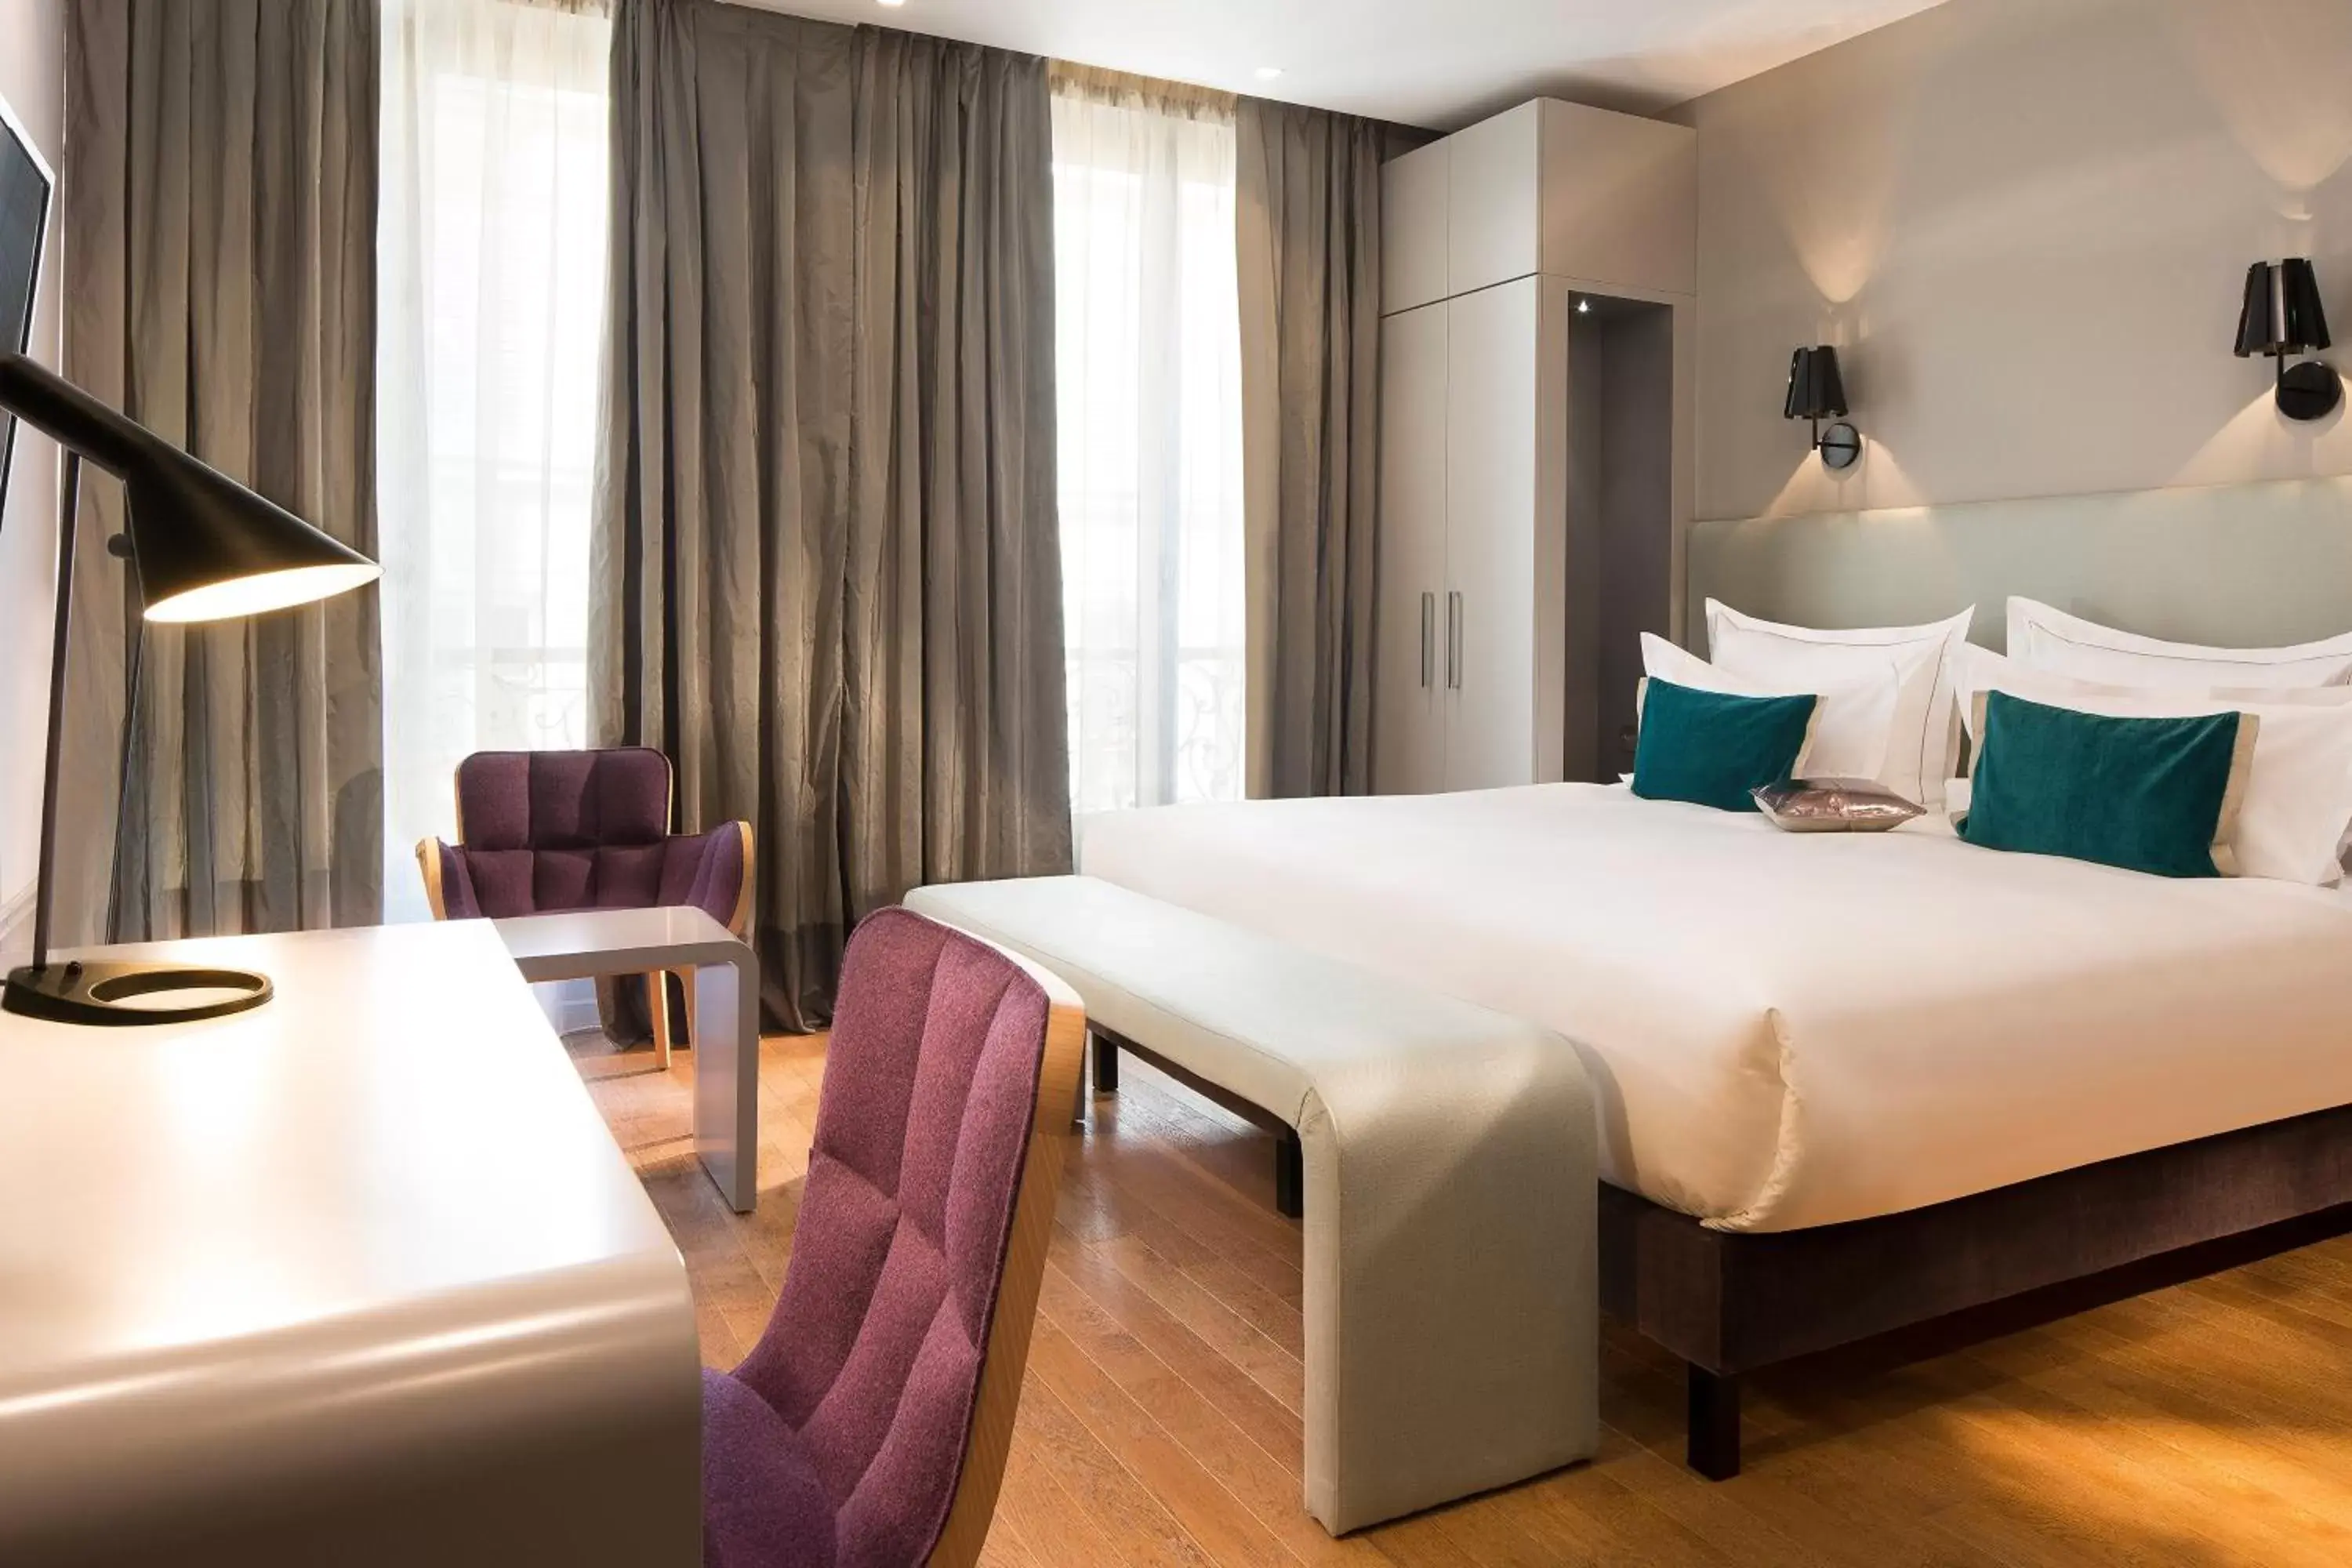 Bed, Room Photo in Monsieur Cadet Hotel & Spa